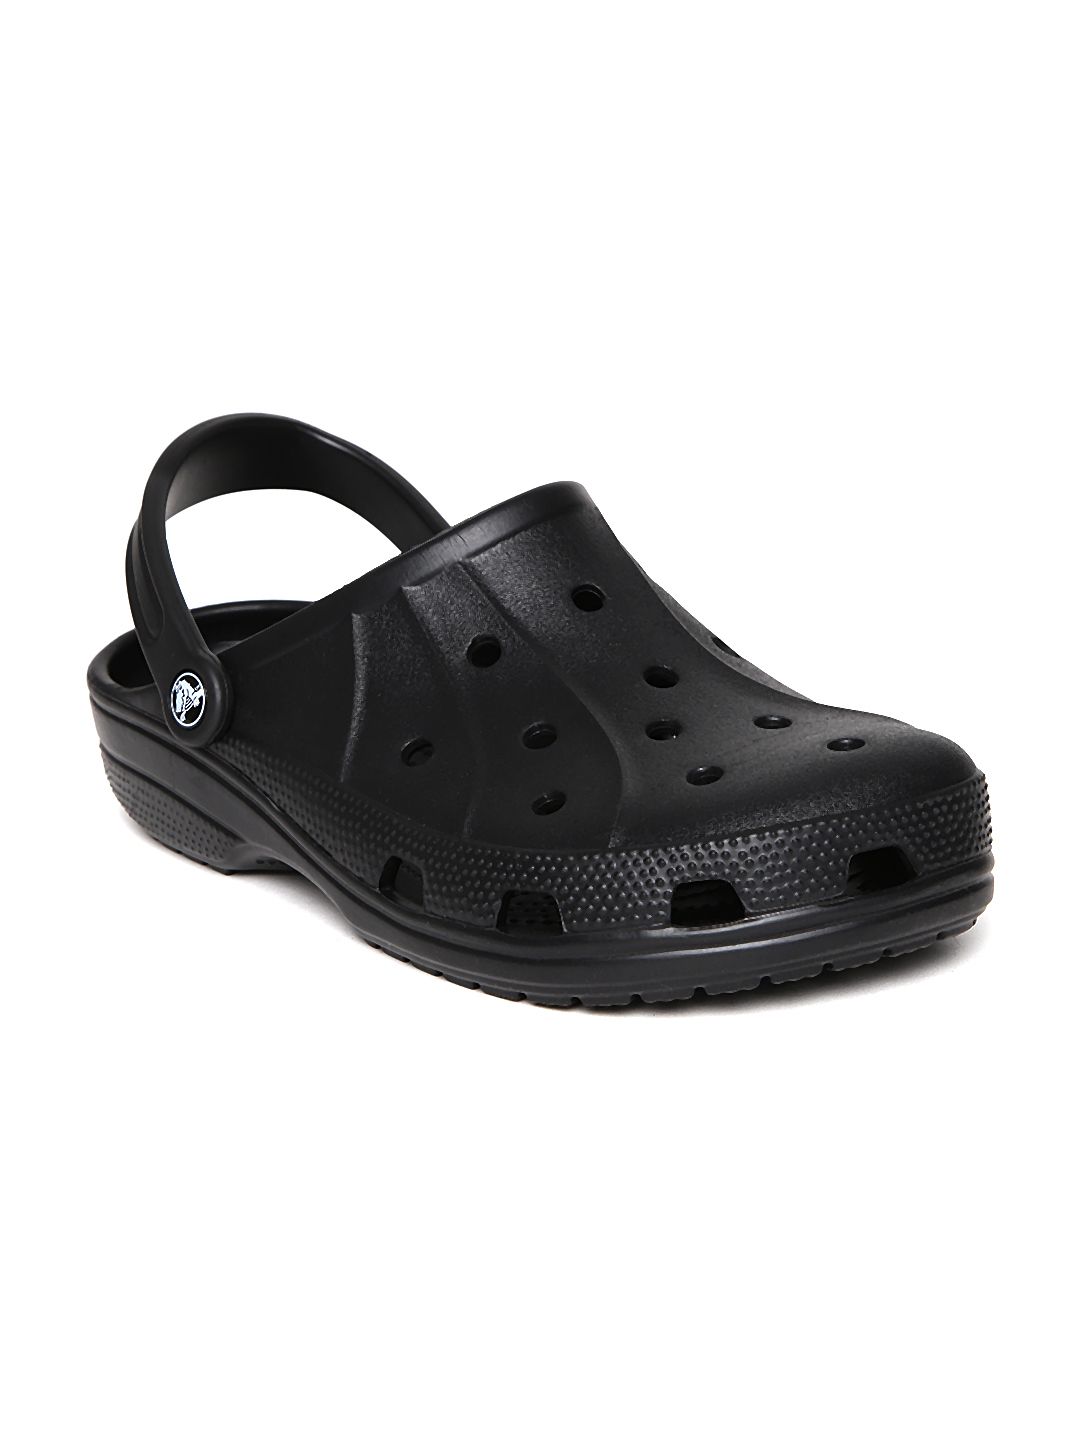 Crocs Ralen Unisex Black Clogs Price in India